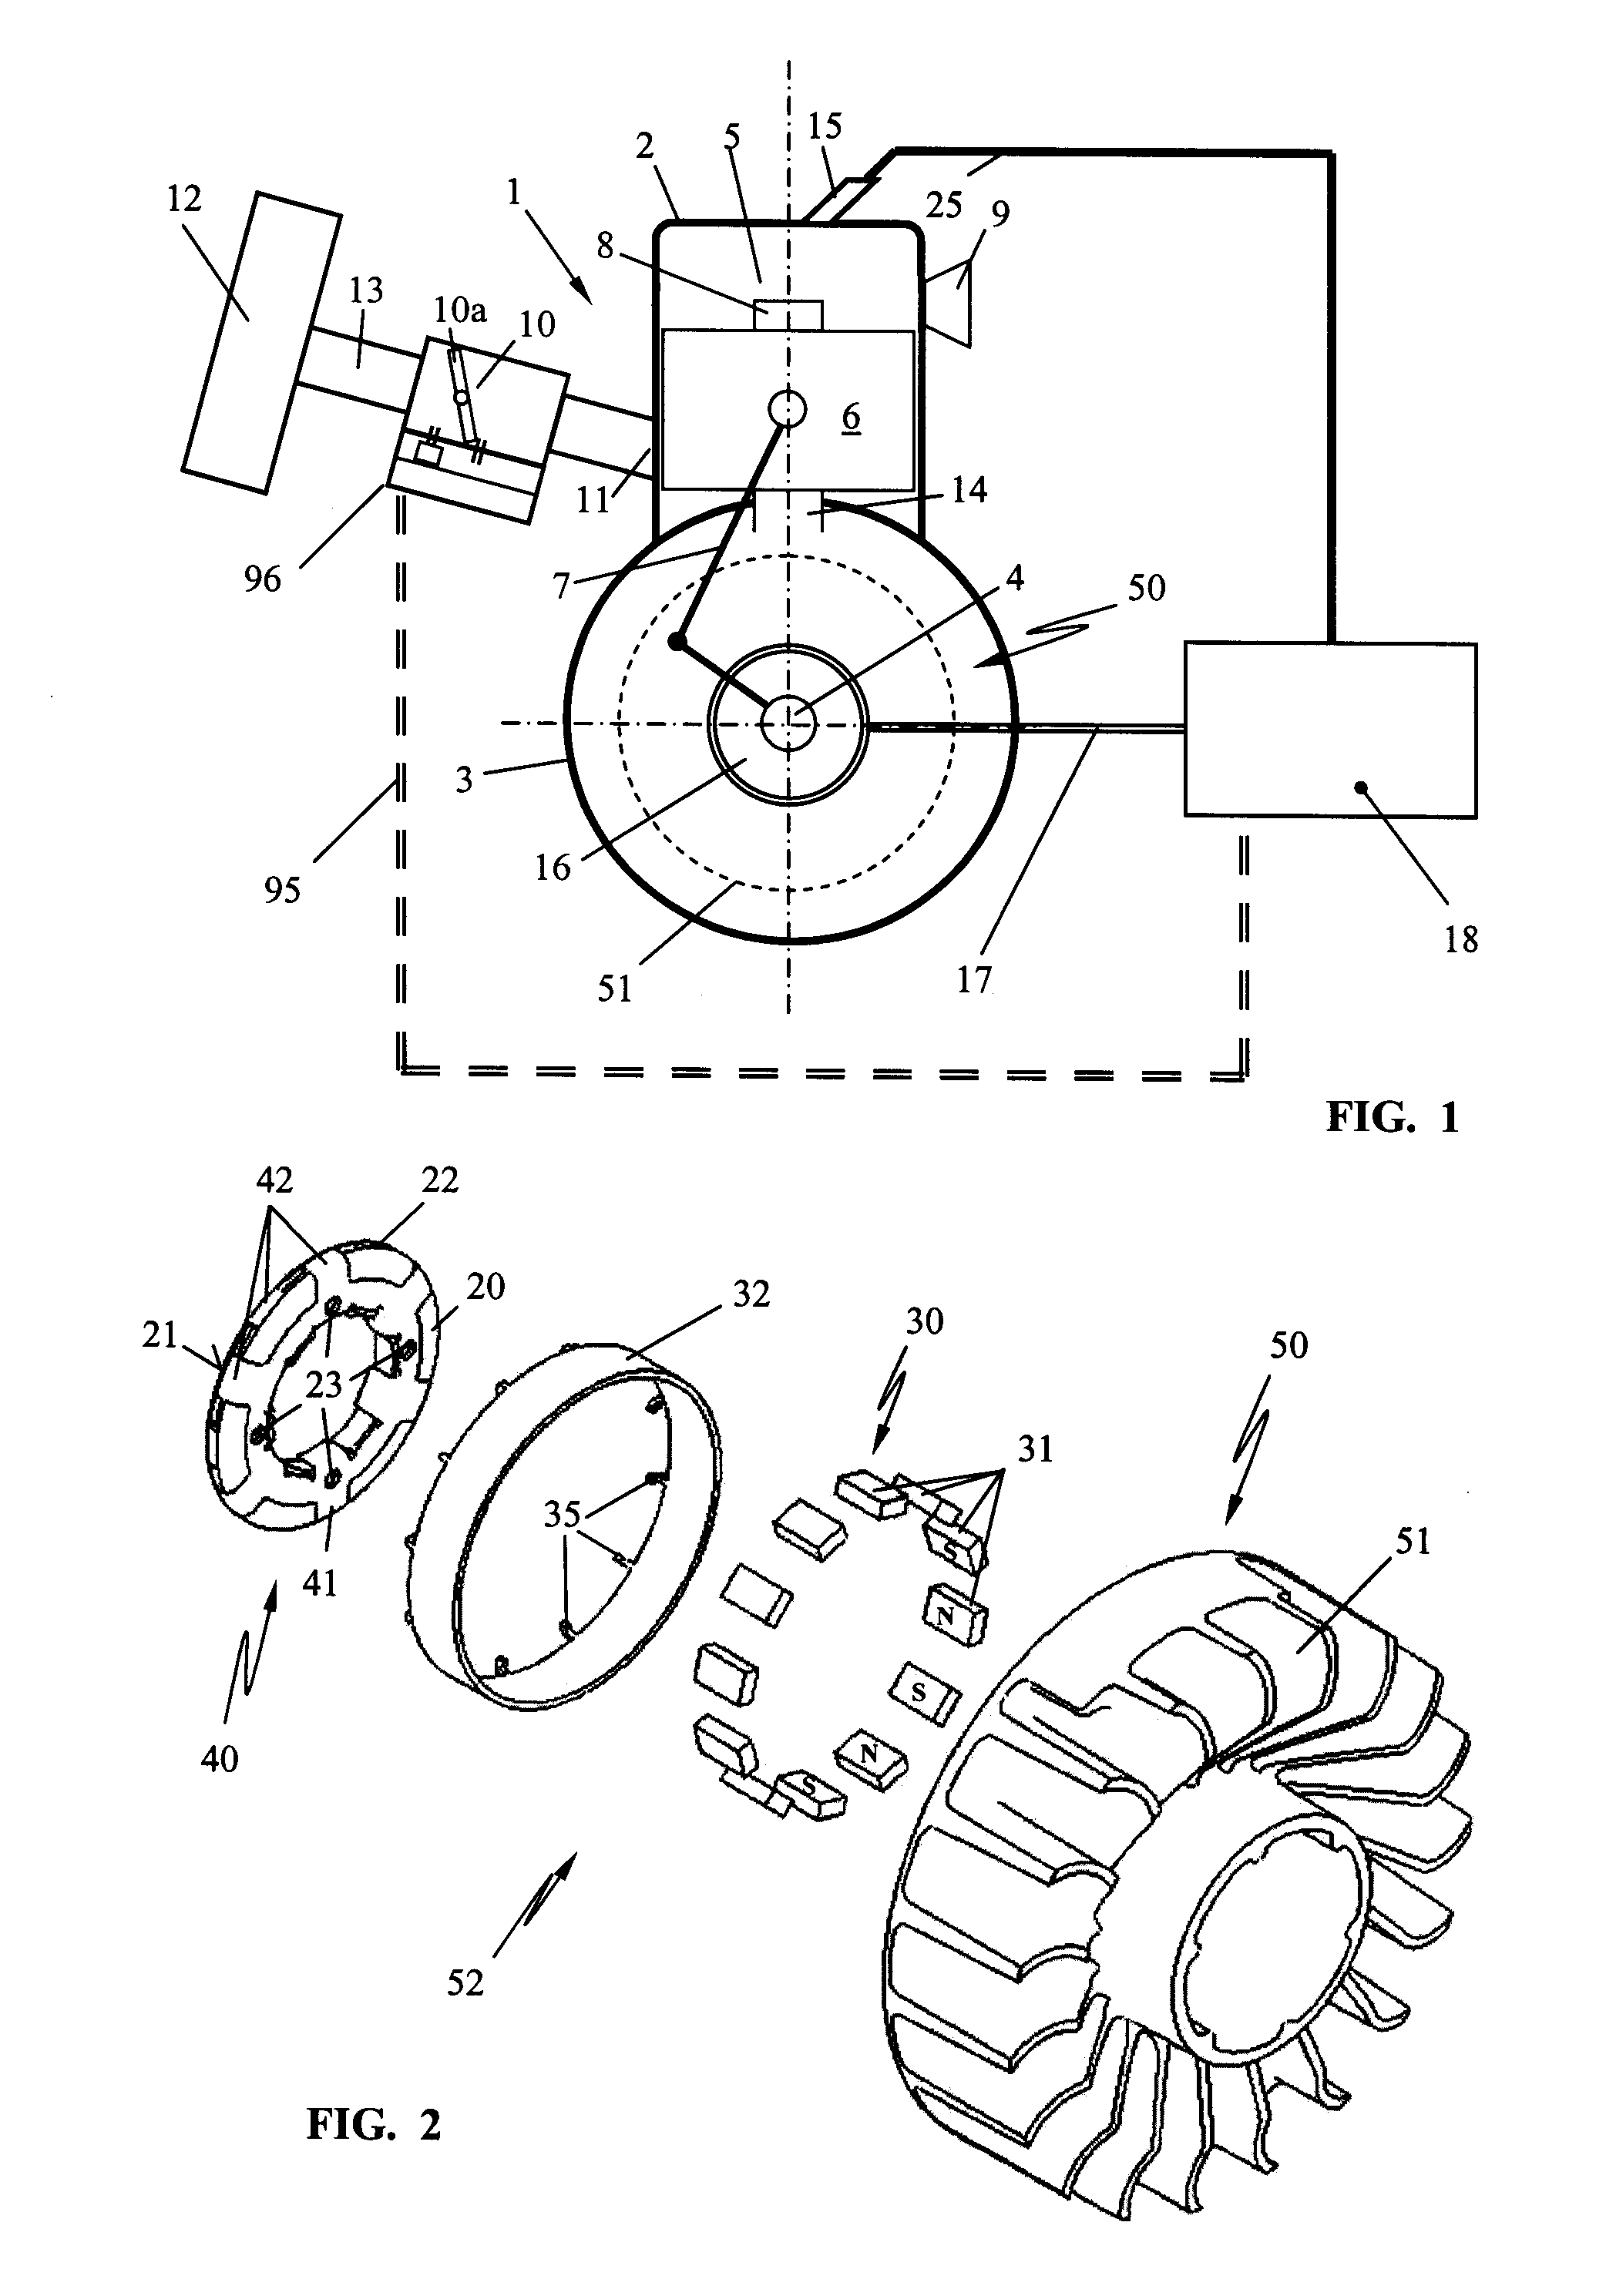 Internal Combustion Engine with Alternator